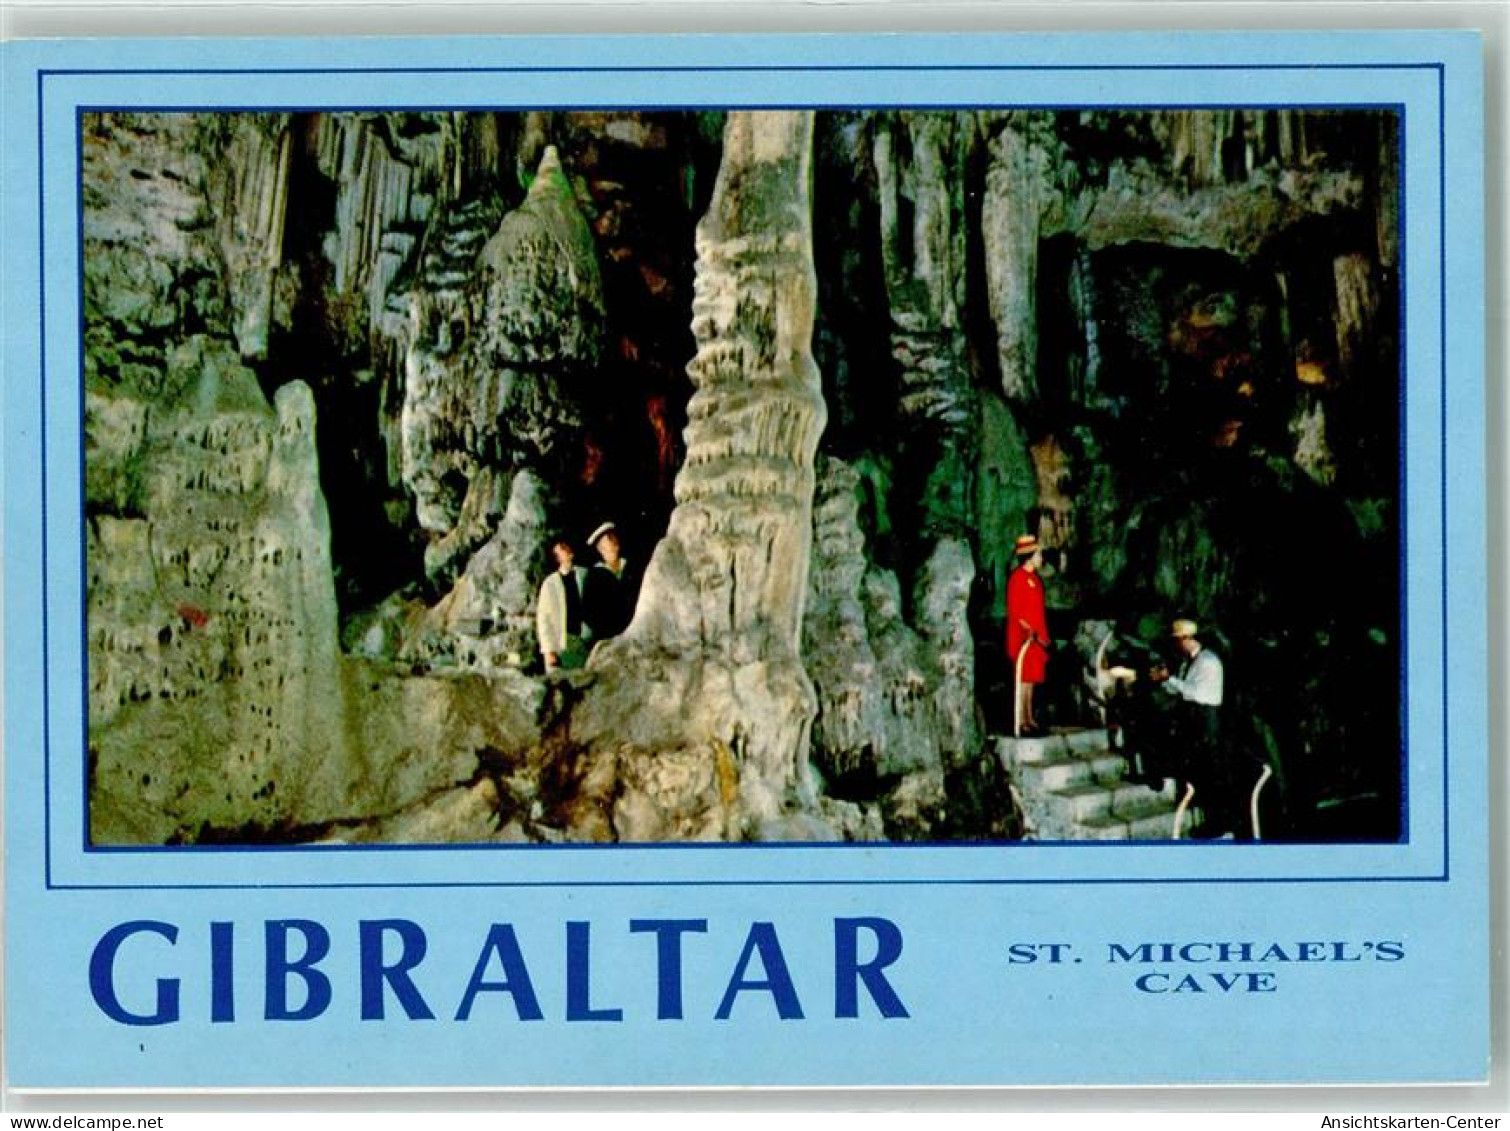 39579901 - Gibraltar - Gibraltar